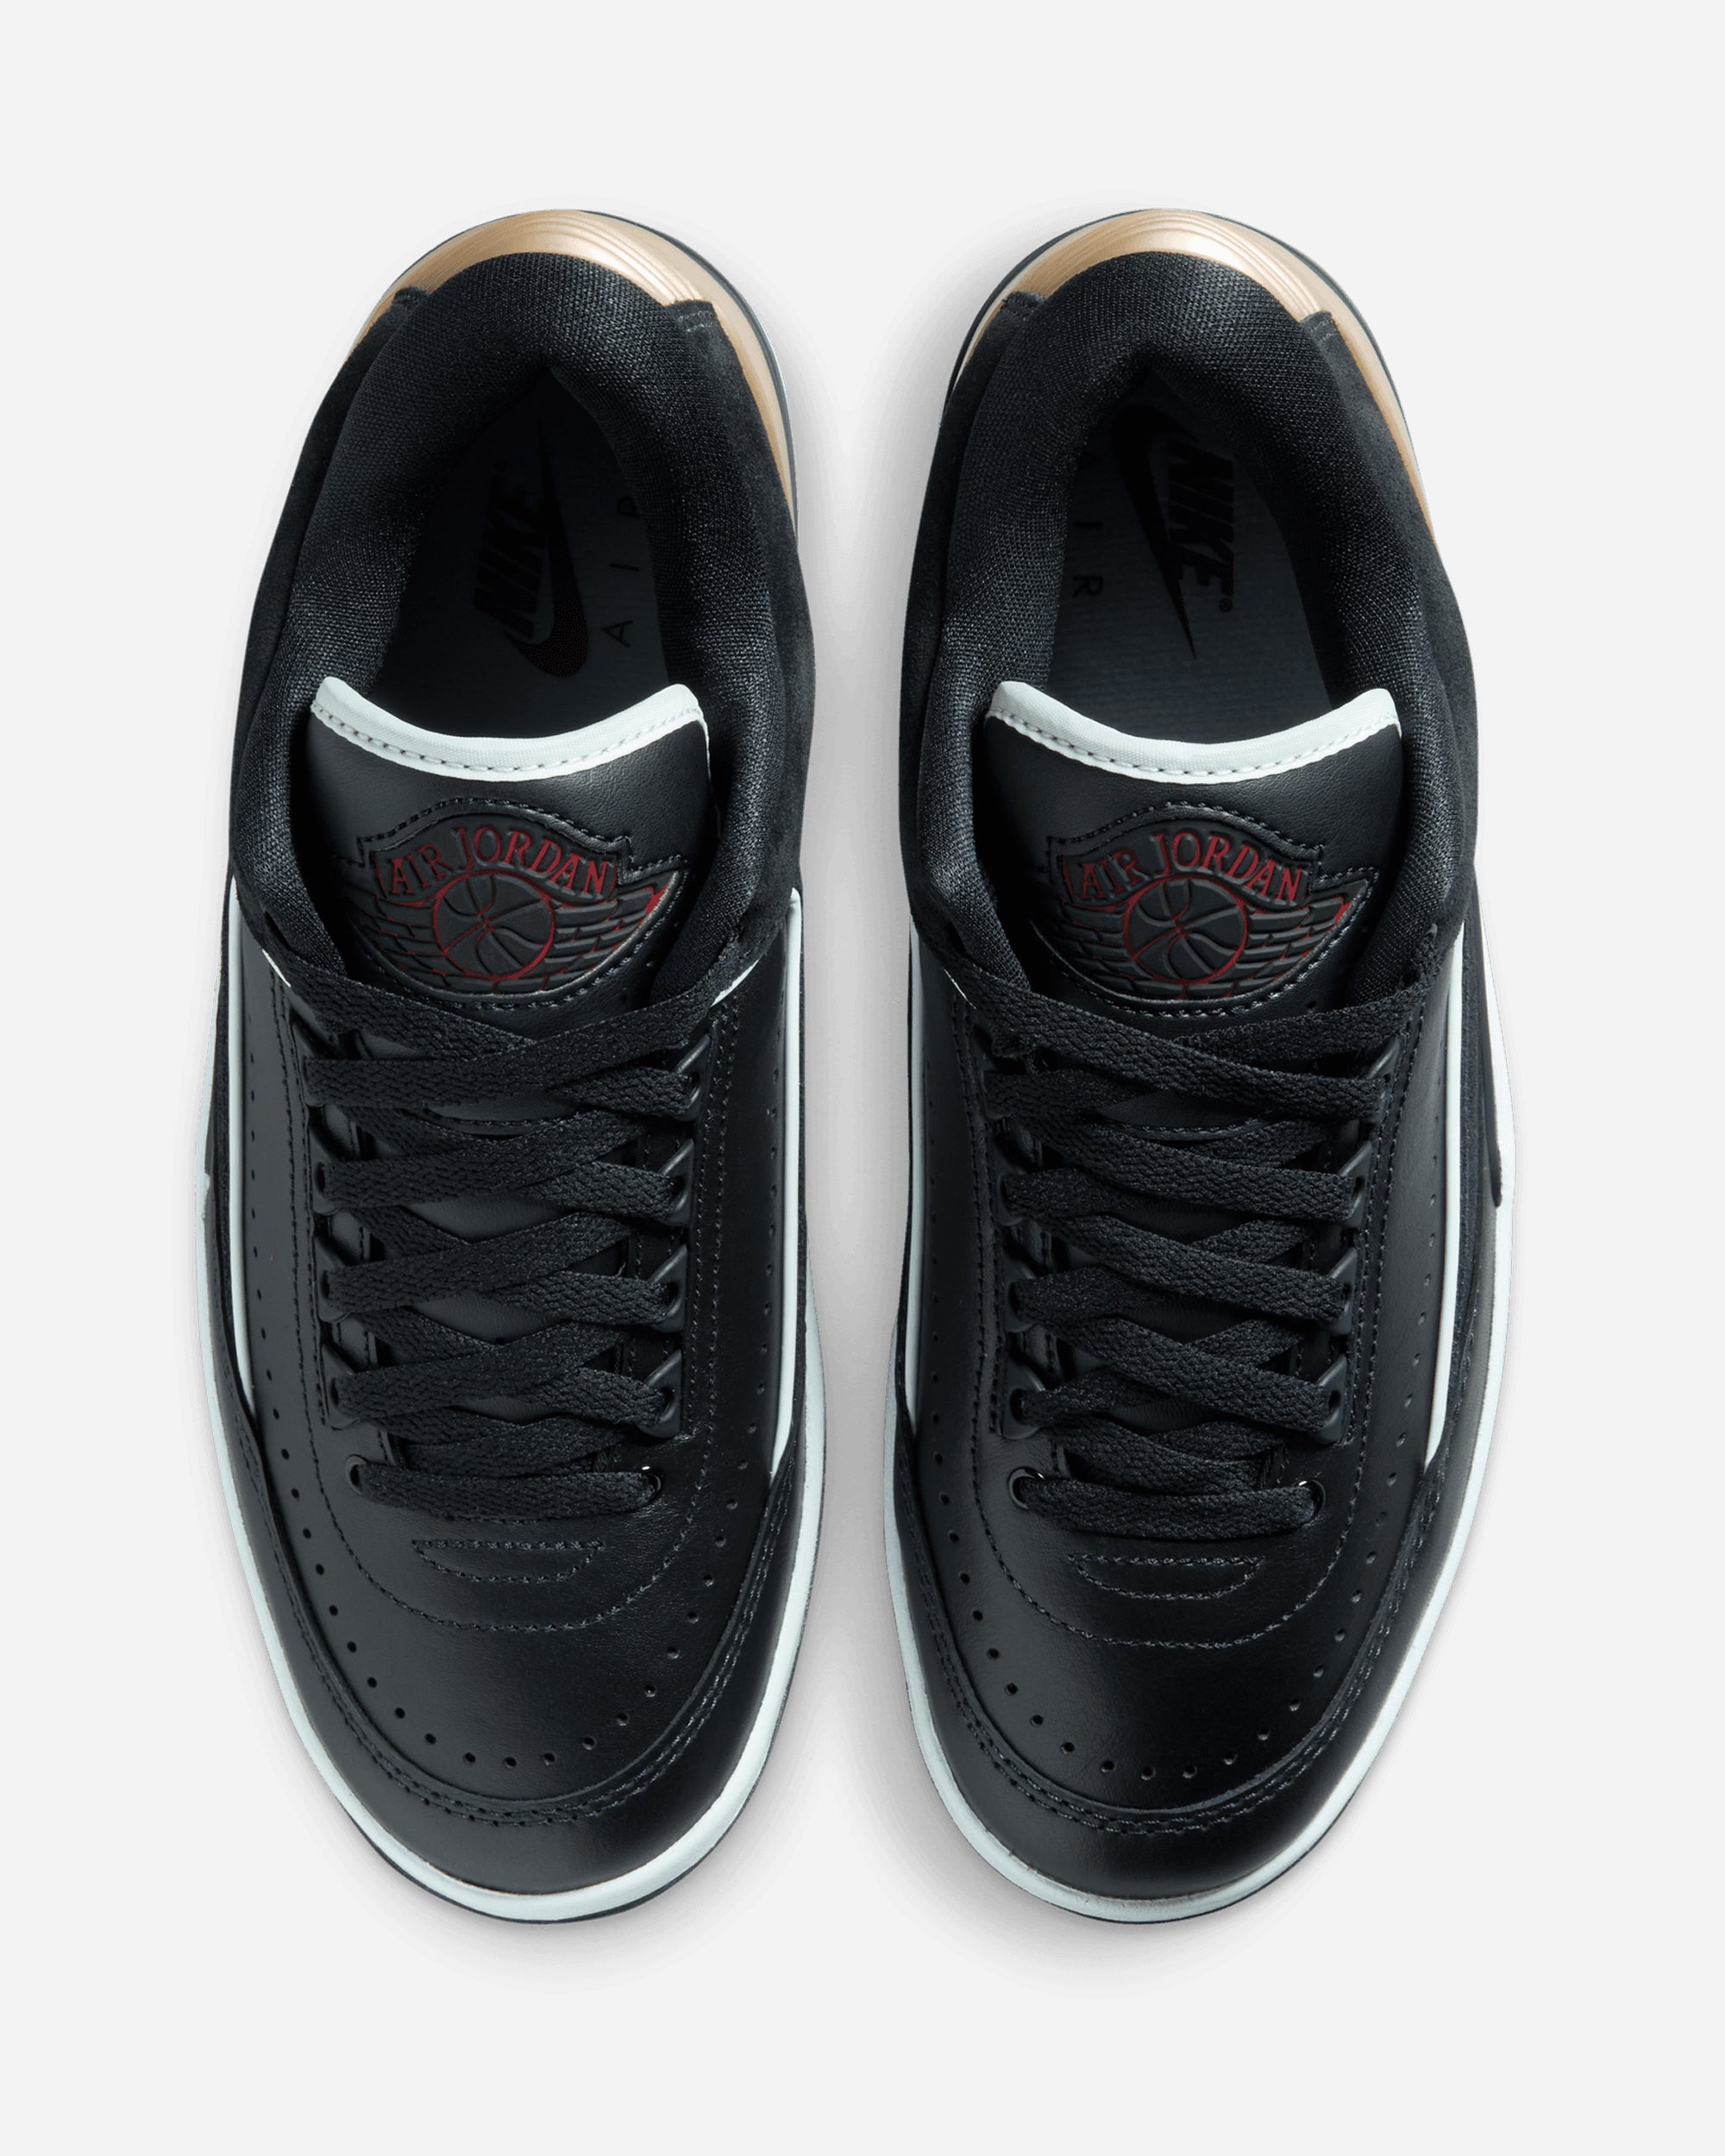 Nike Air Jordan 2 Retro Low Black/Gold DX4401-001